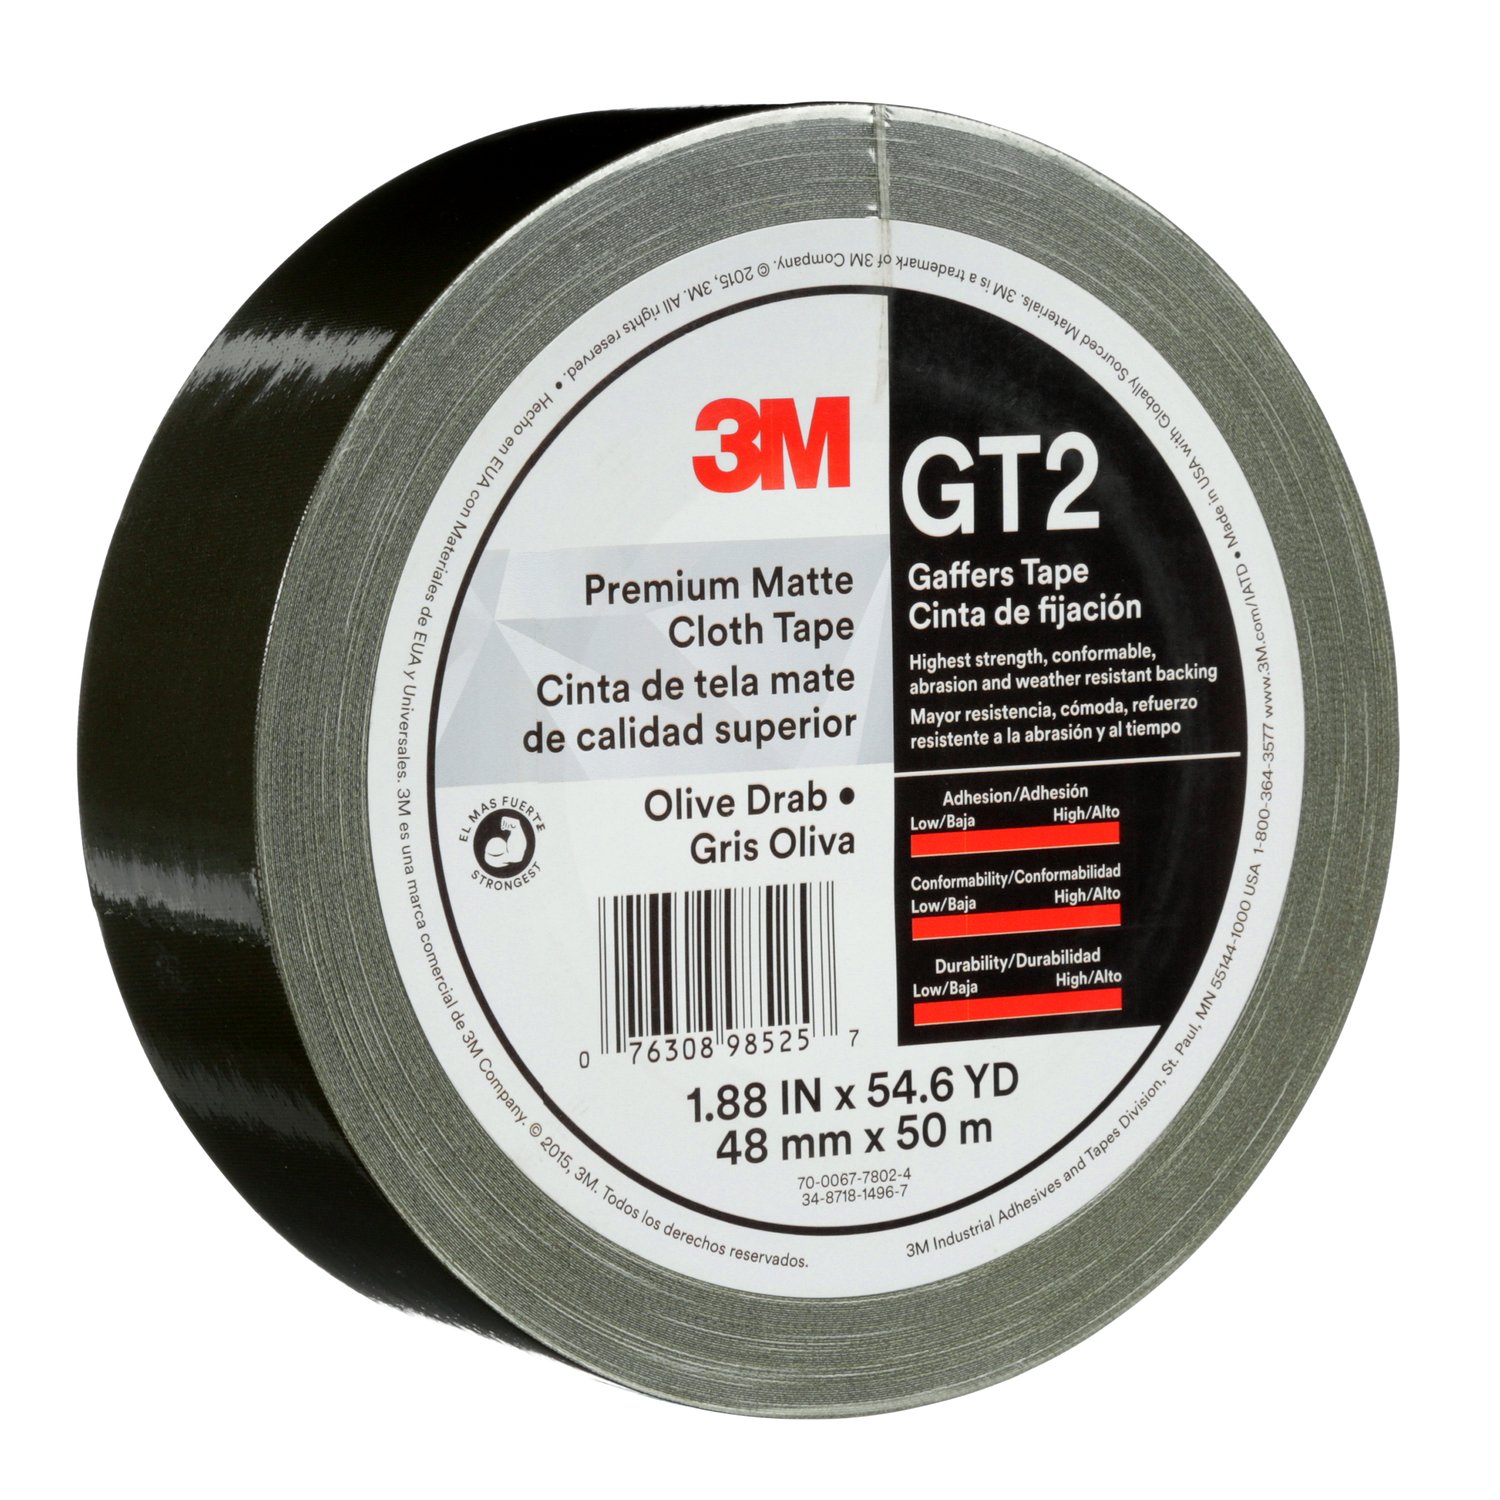 7010375519 - 3M Premium Matte Cloth (Gaffers) Tape GT2, Olive Drab, 48 mm x 50 m, 11
mil, 24/Case